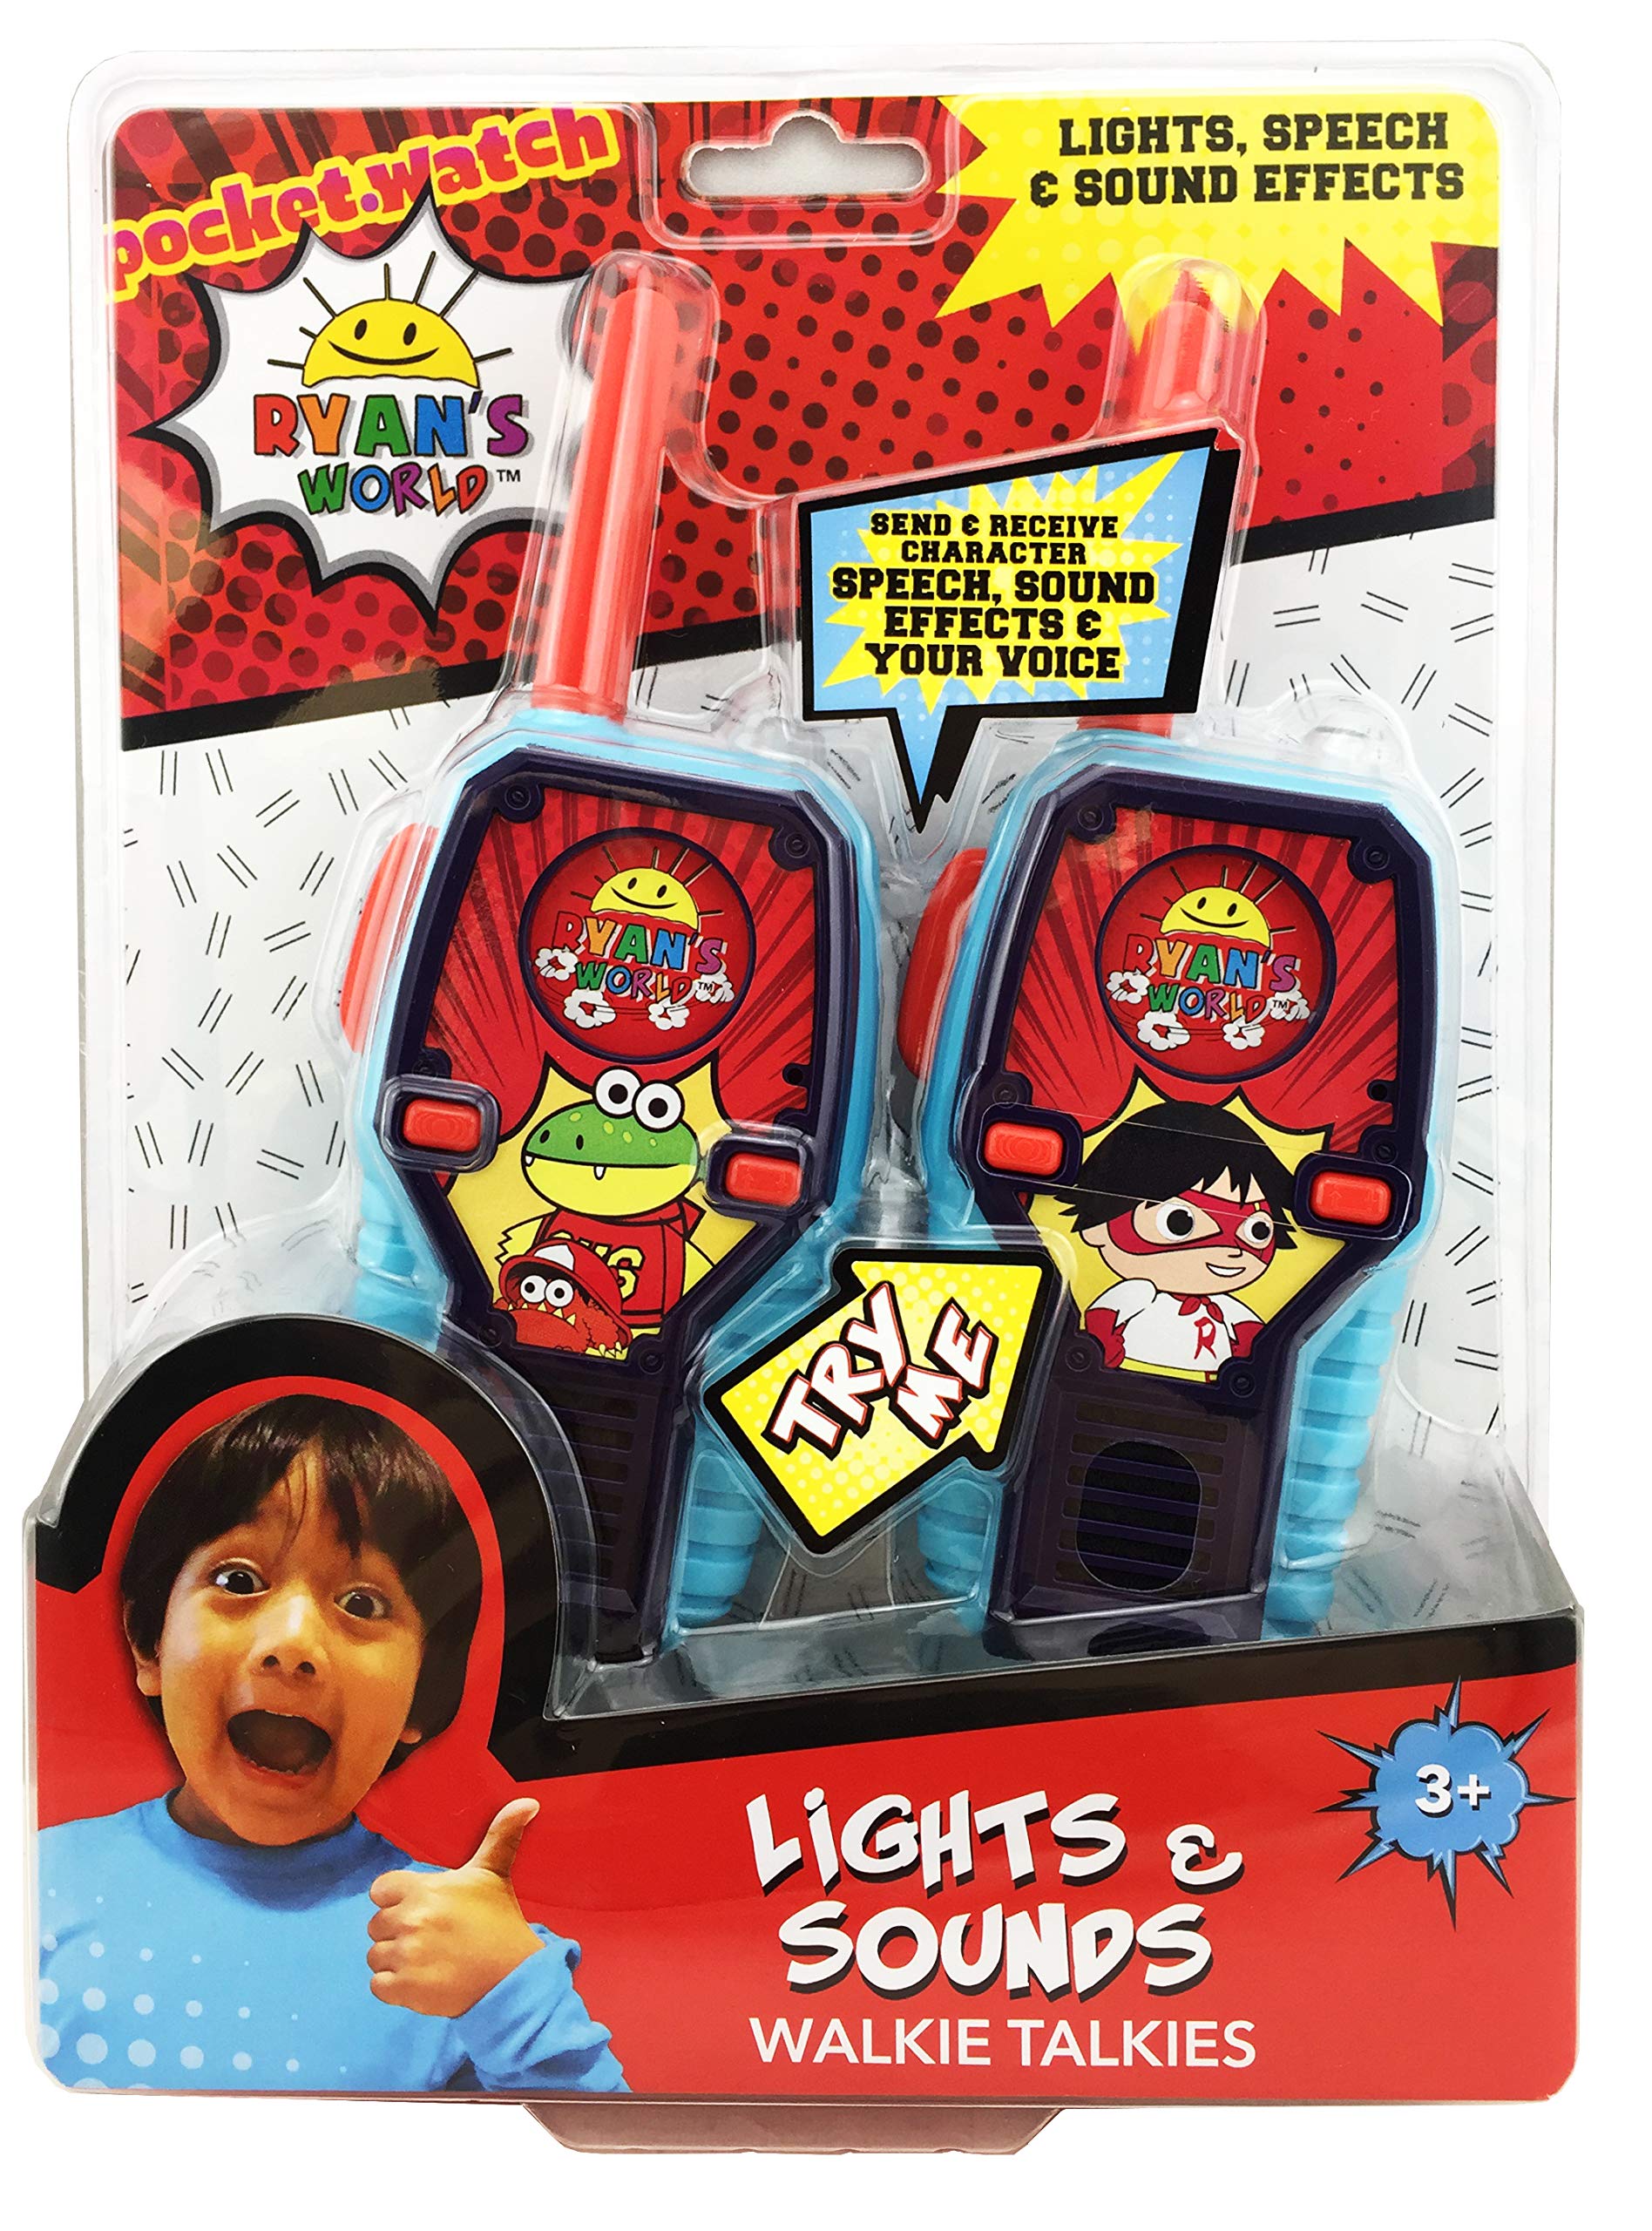 Ryans World Walkie Talkies for Kids, 2 Way Radio Long Range, Light, Sound Effects Kids Toys & Handheld Kids Walkie Talkies, Toys for Boys & Girls for Outdoor Adventure Game